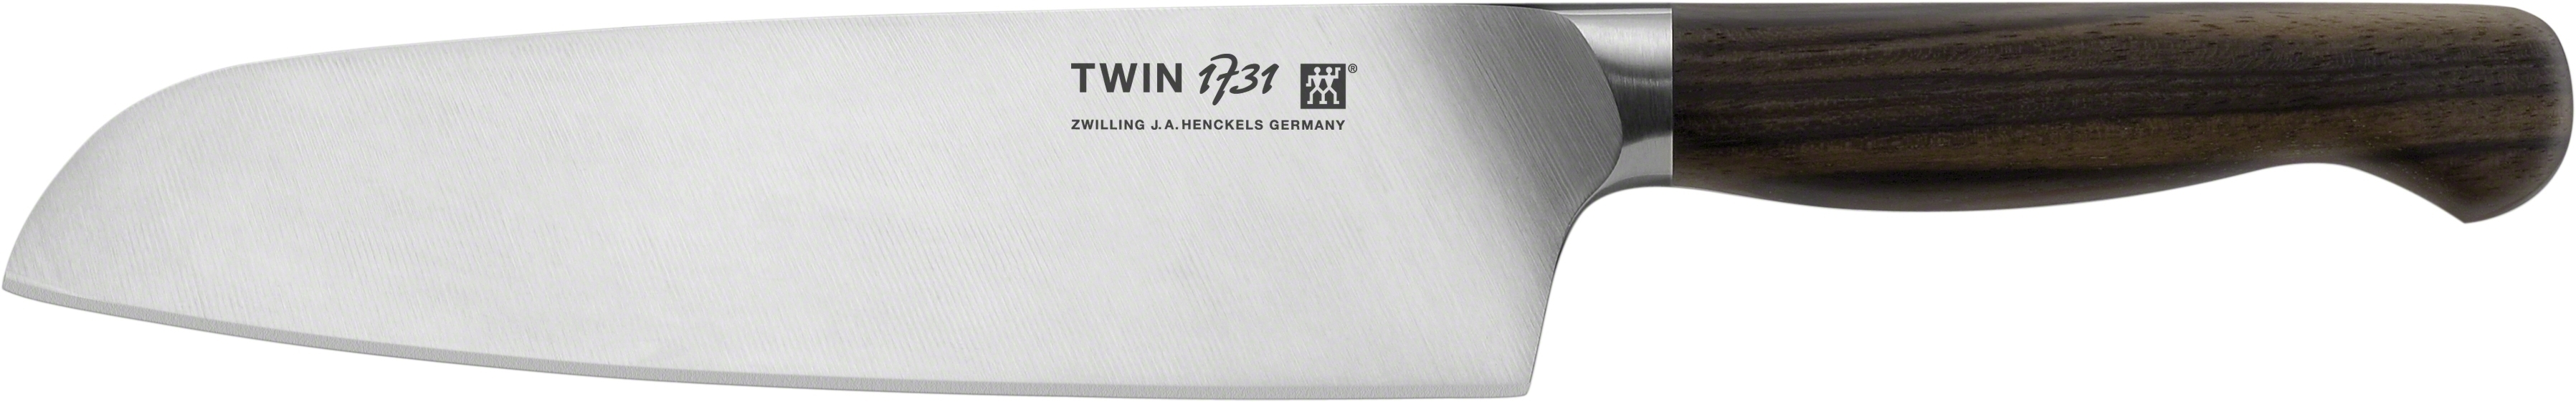 Zwilling TWIN 1731 Santokumesser 18 cm - 31867-181-0